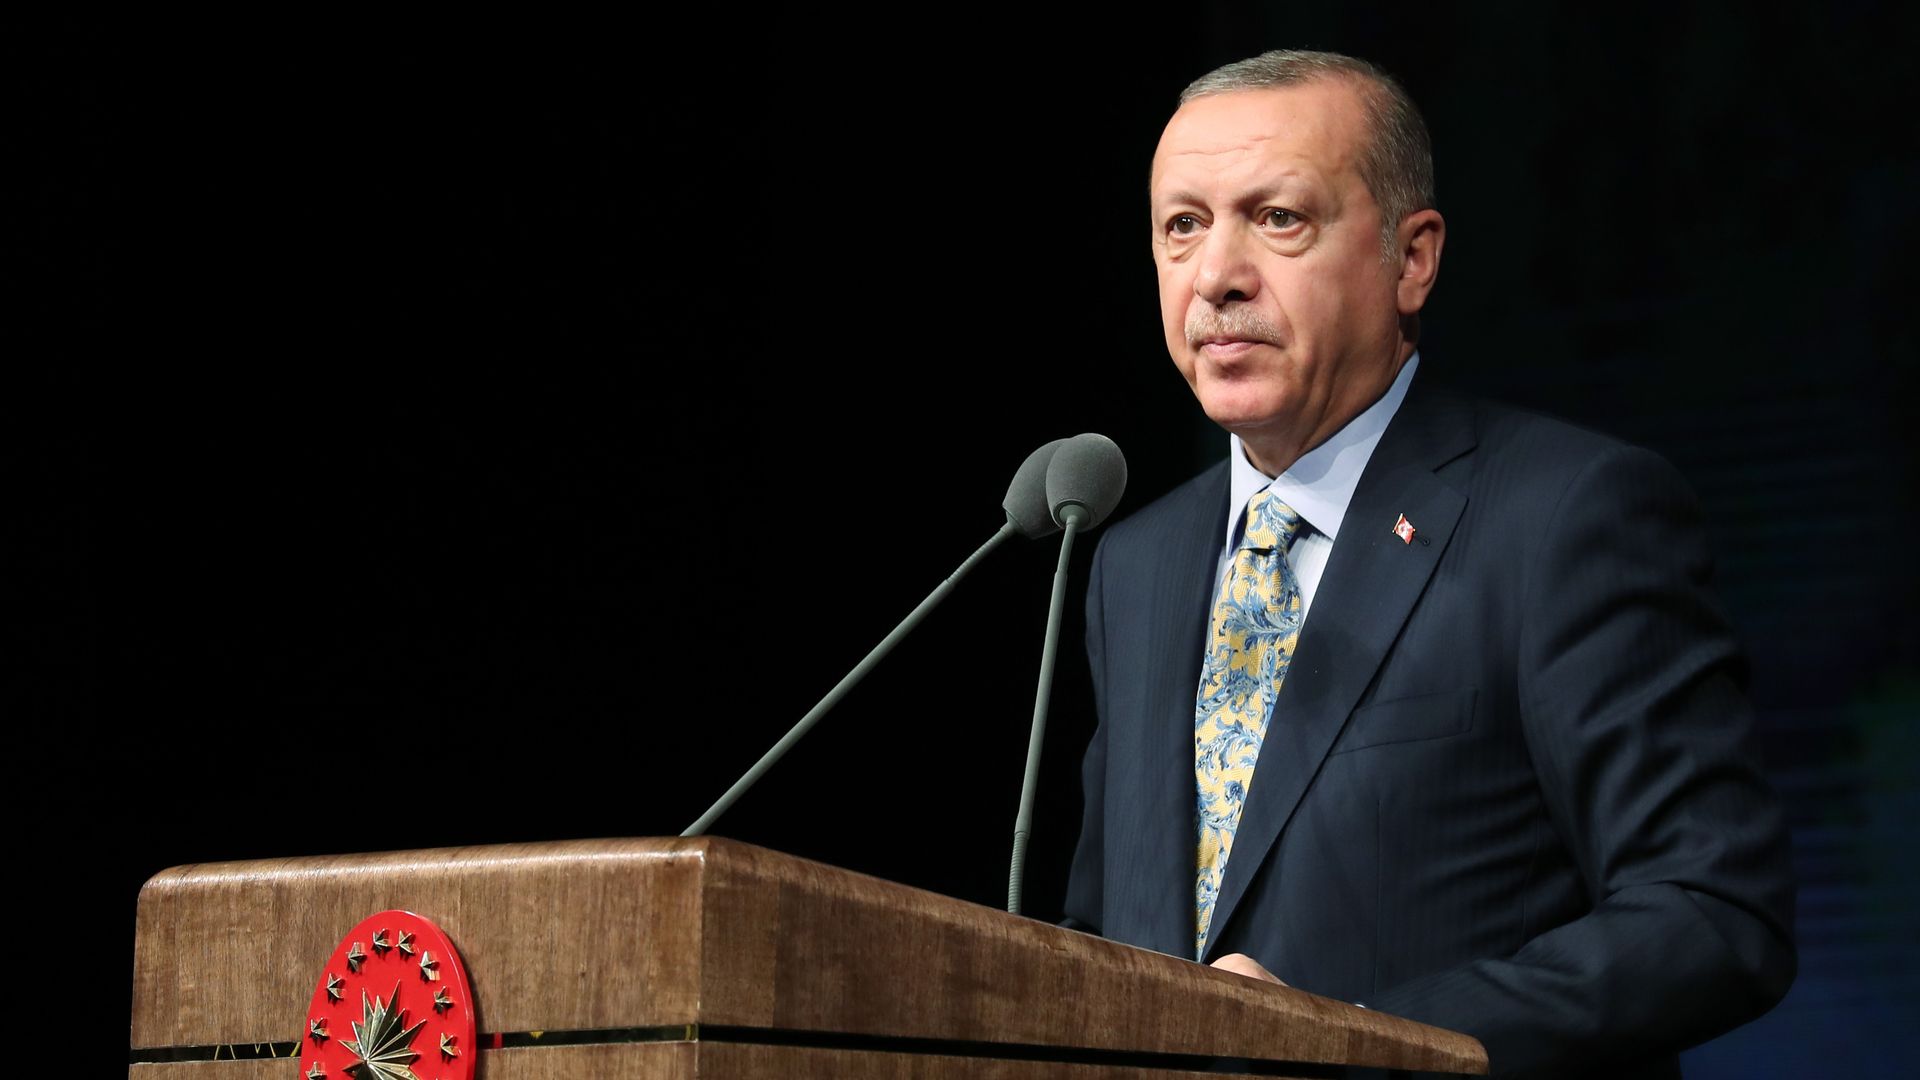 President of Turkey Recep Tayyip Erdogan makes a speech during judges and prosecutors' appointment ceremony at Bestepe Congress Center in Ankara, Turkey on October 16, 2018.